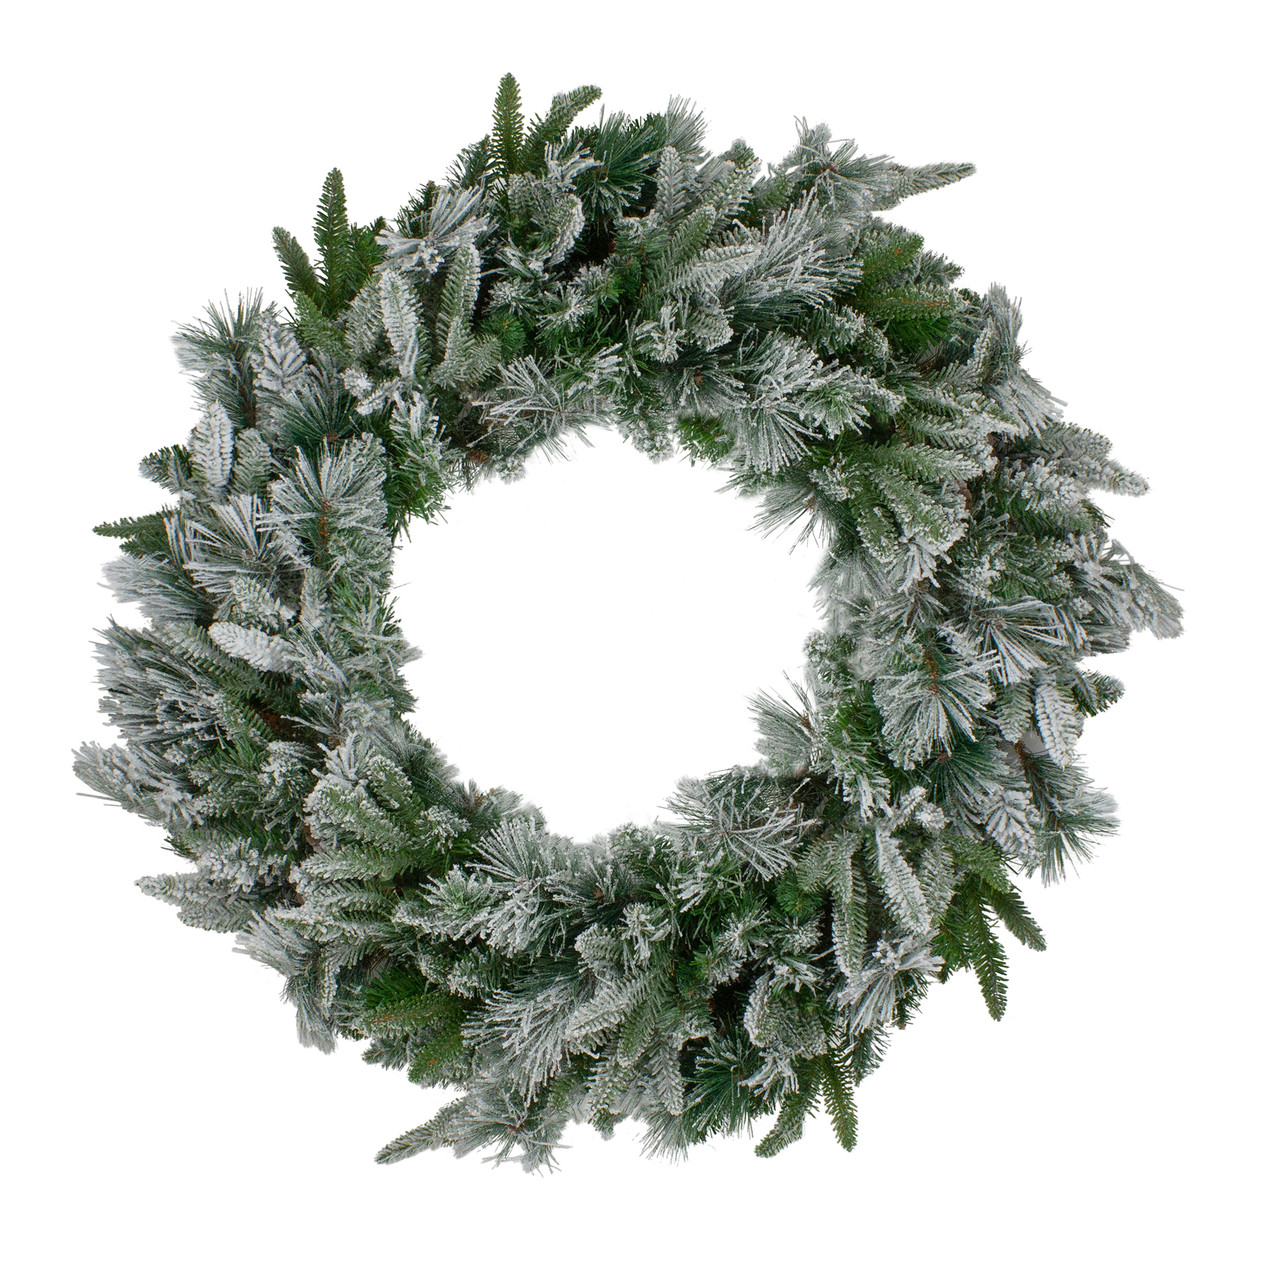 Rosemary Emerald flocked Christmas wreath